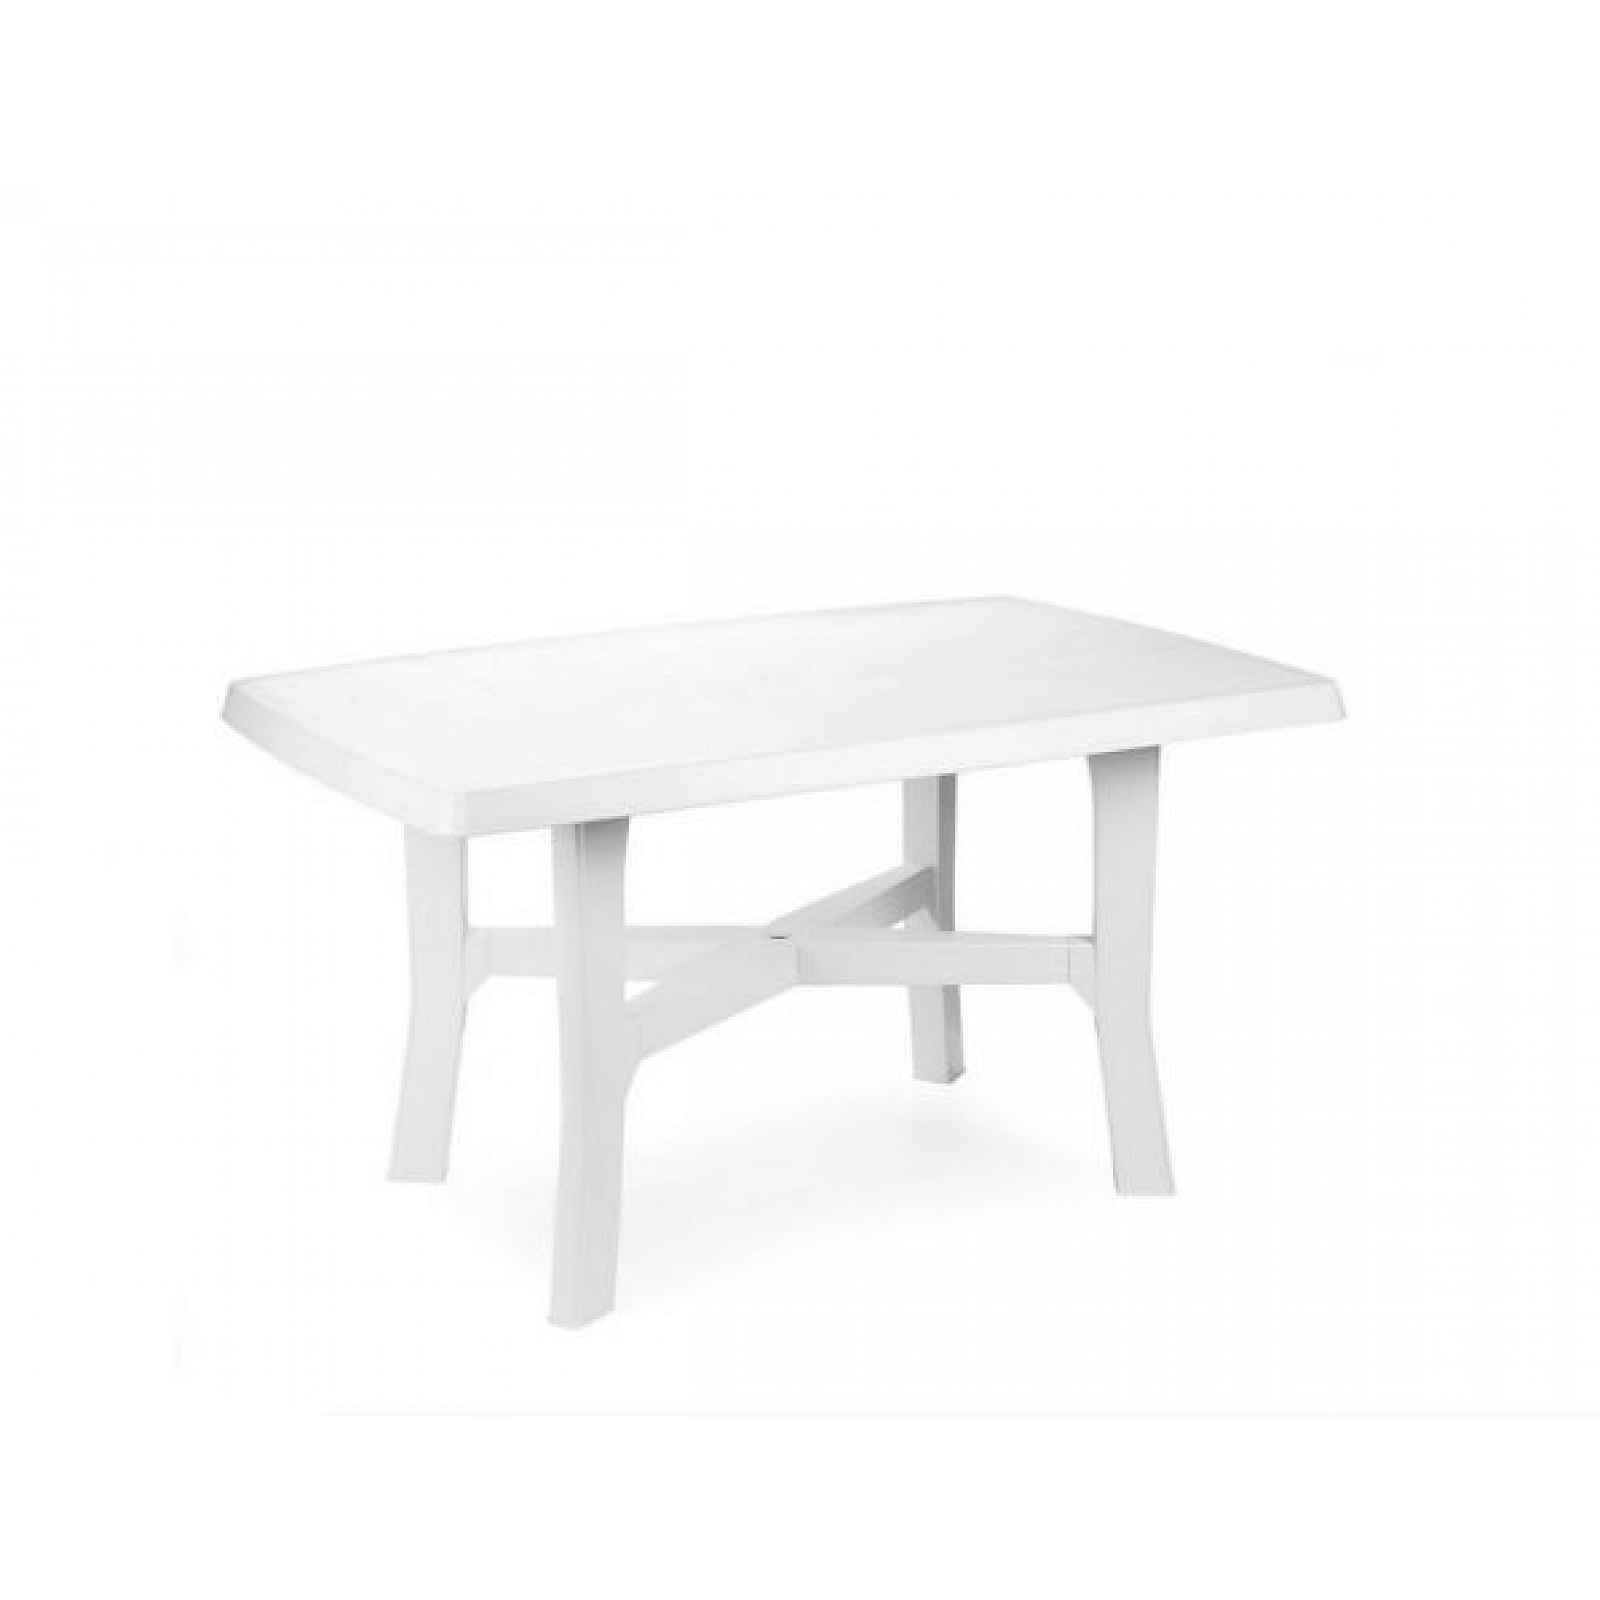 Plastový zahradní stůl Rodano bílý